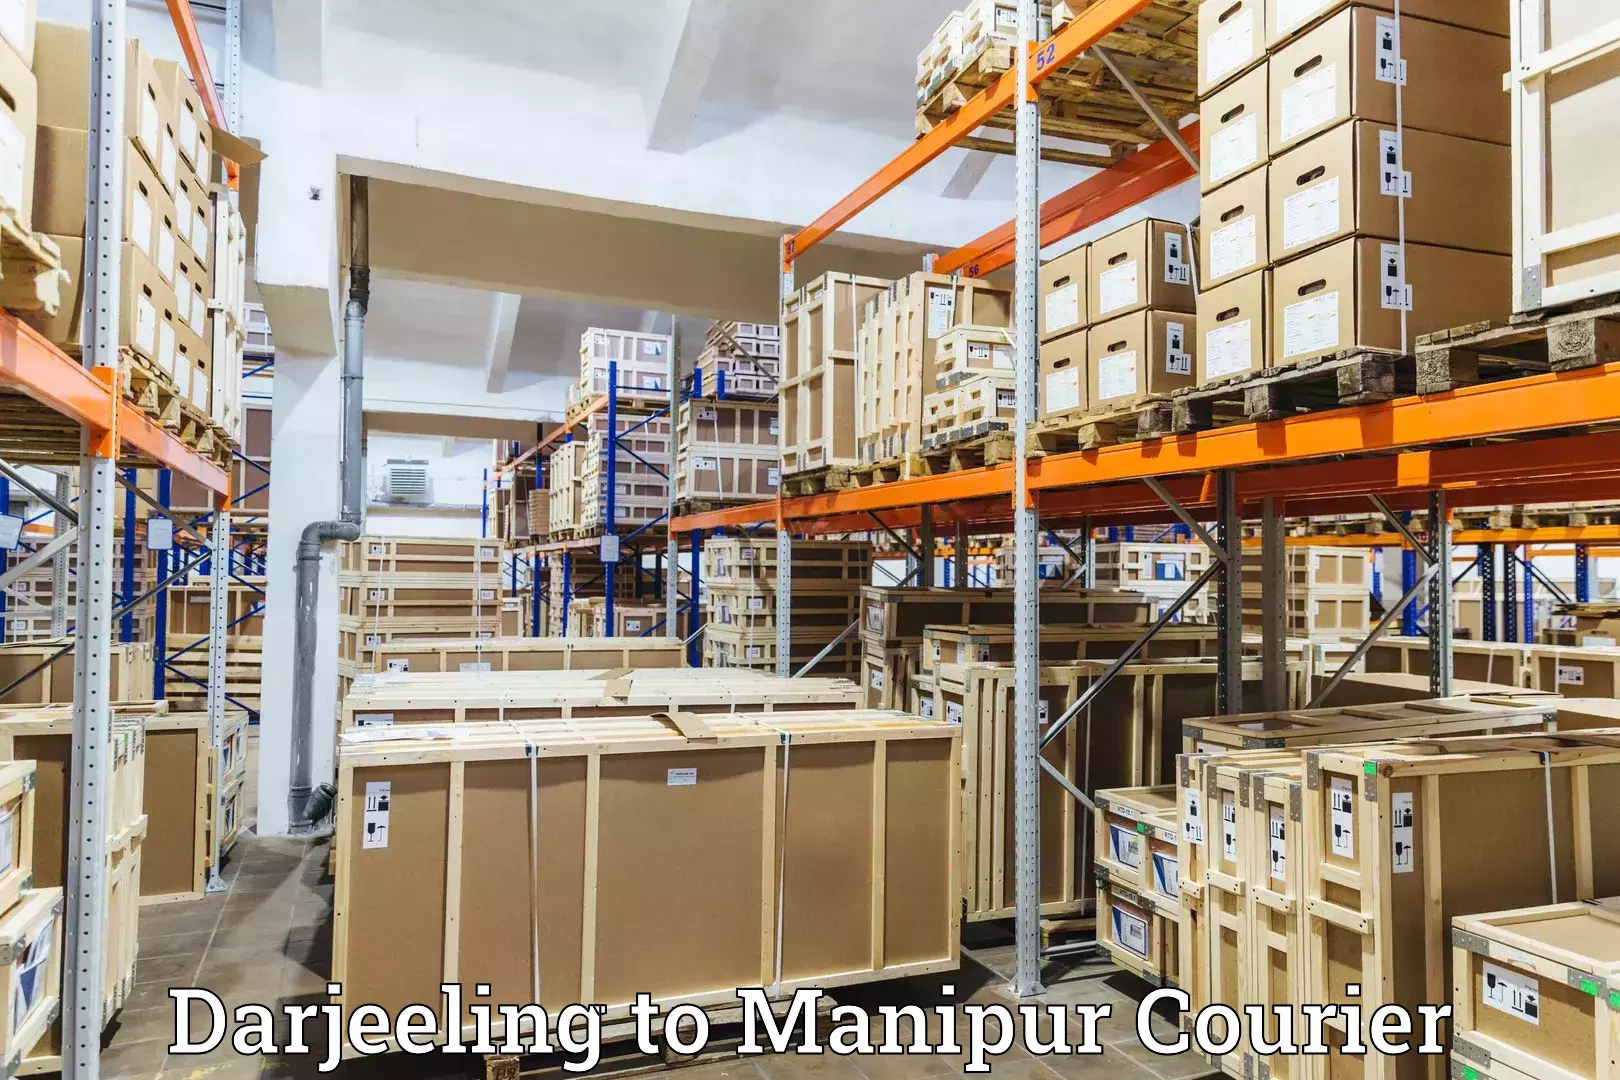 Courier service comparison Darjeeling to Manipur